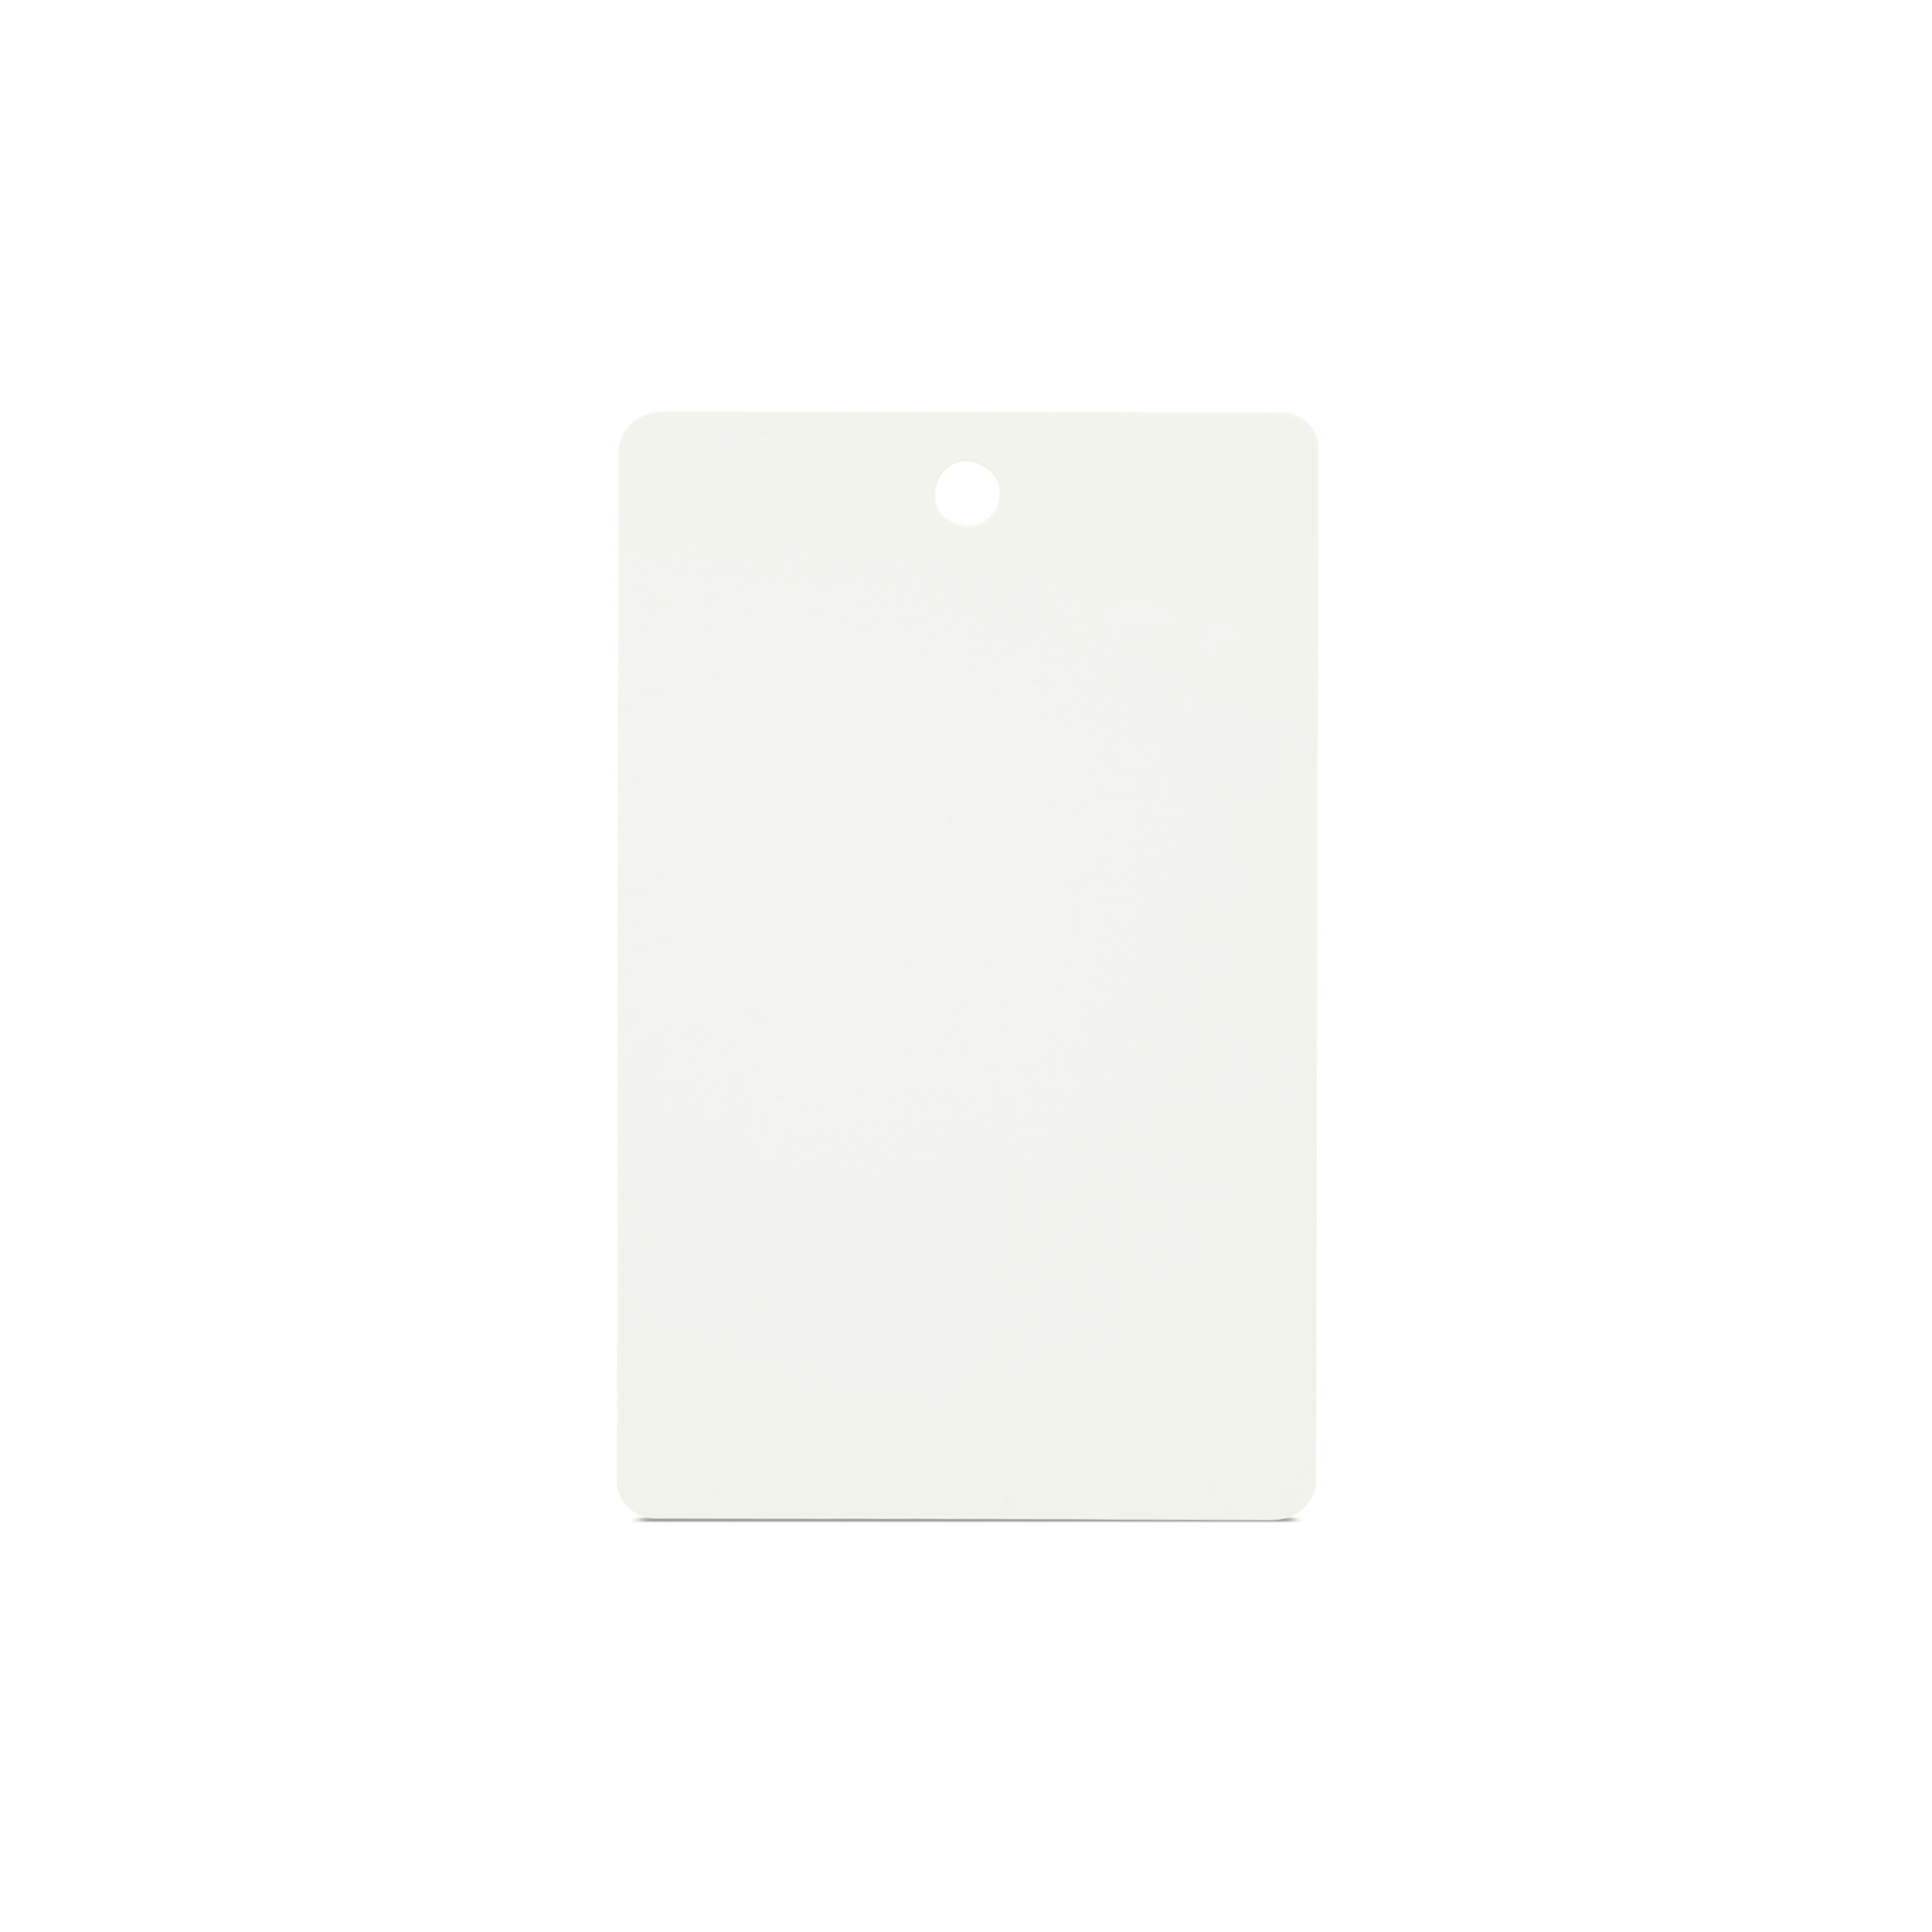 NFC Karte PVC - 85,6 x 54 mm - NTAG216 - 924 Byte - weiß - Hochformat gelocht